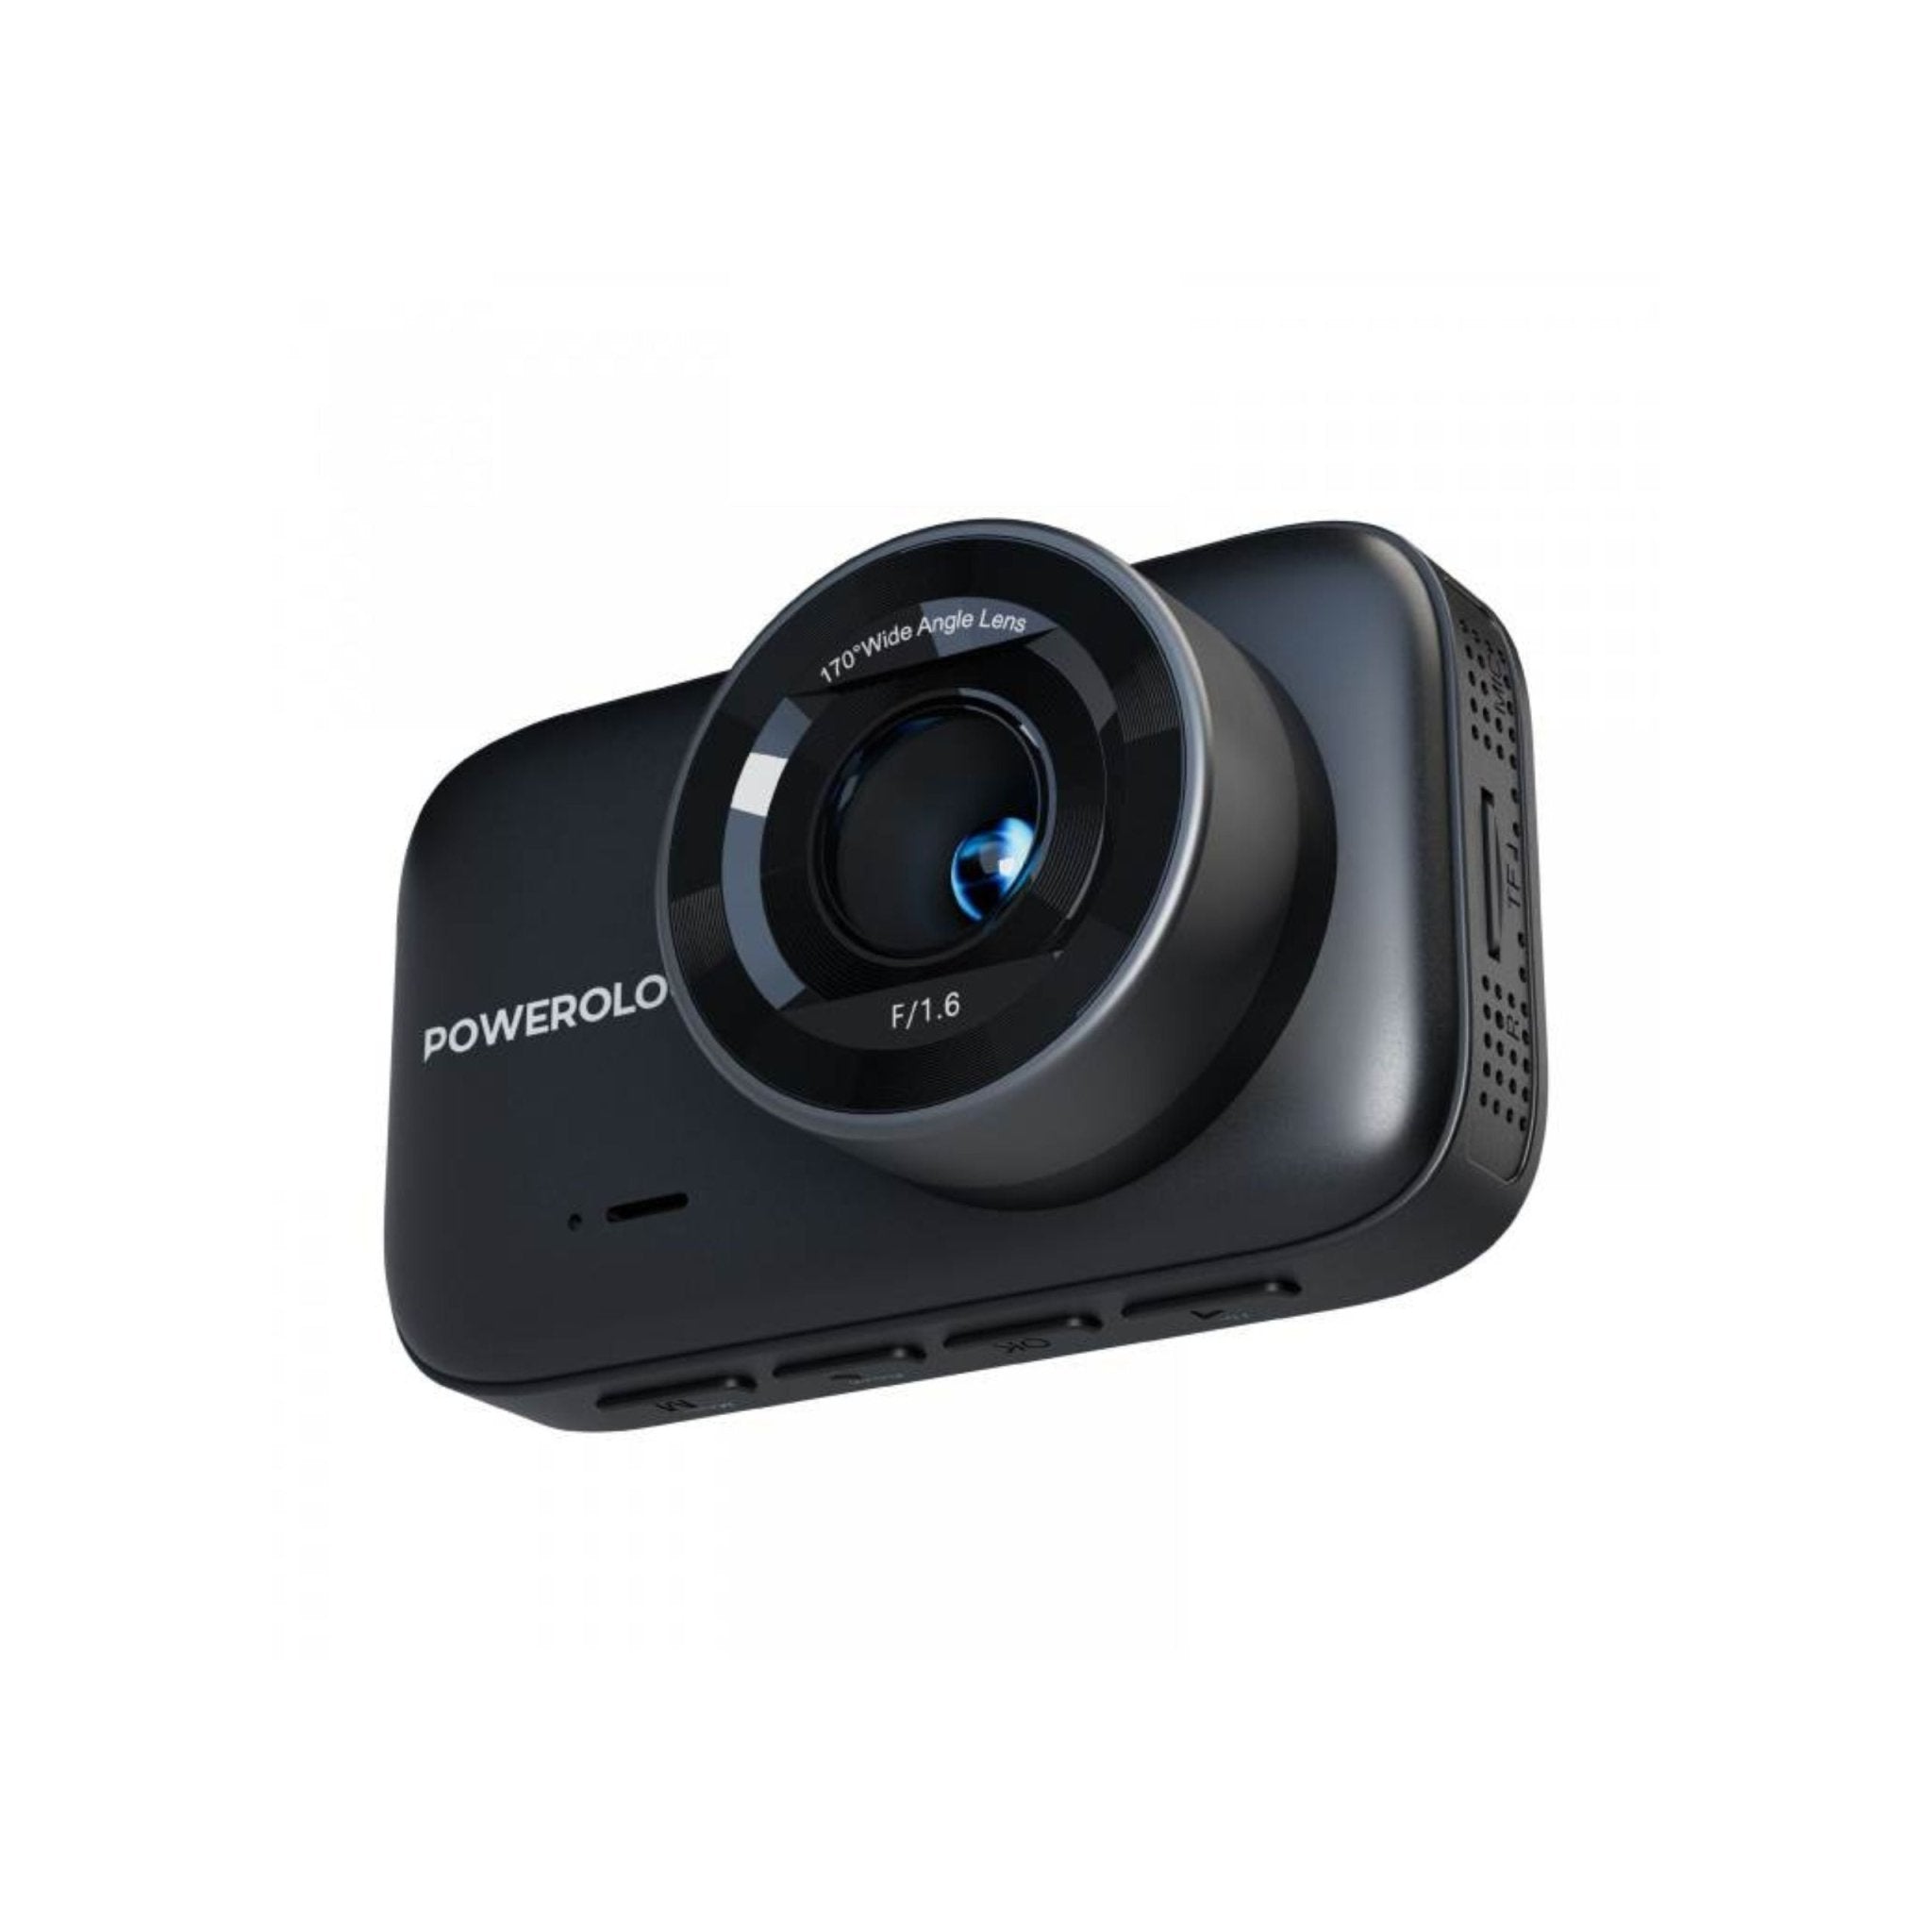 Powerology Dash Camera Ultra 4K - Black